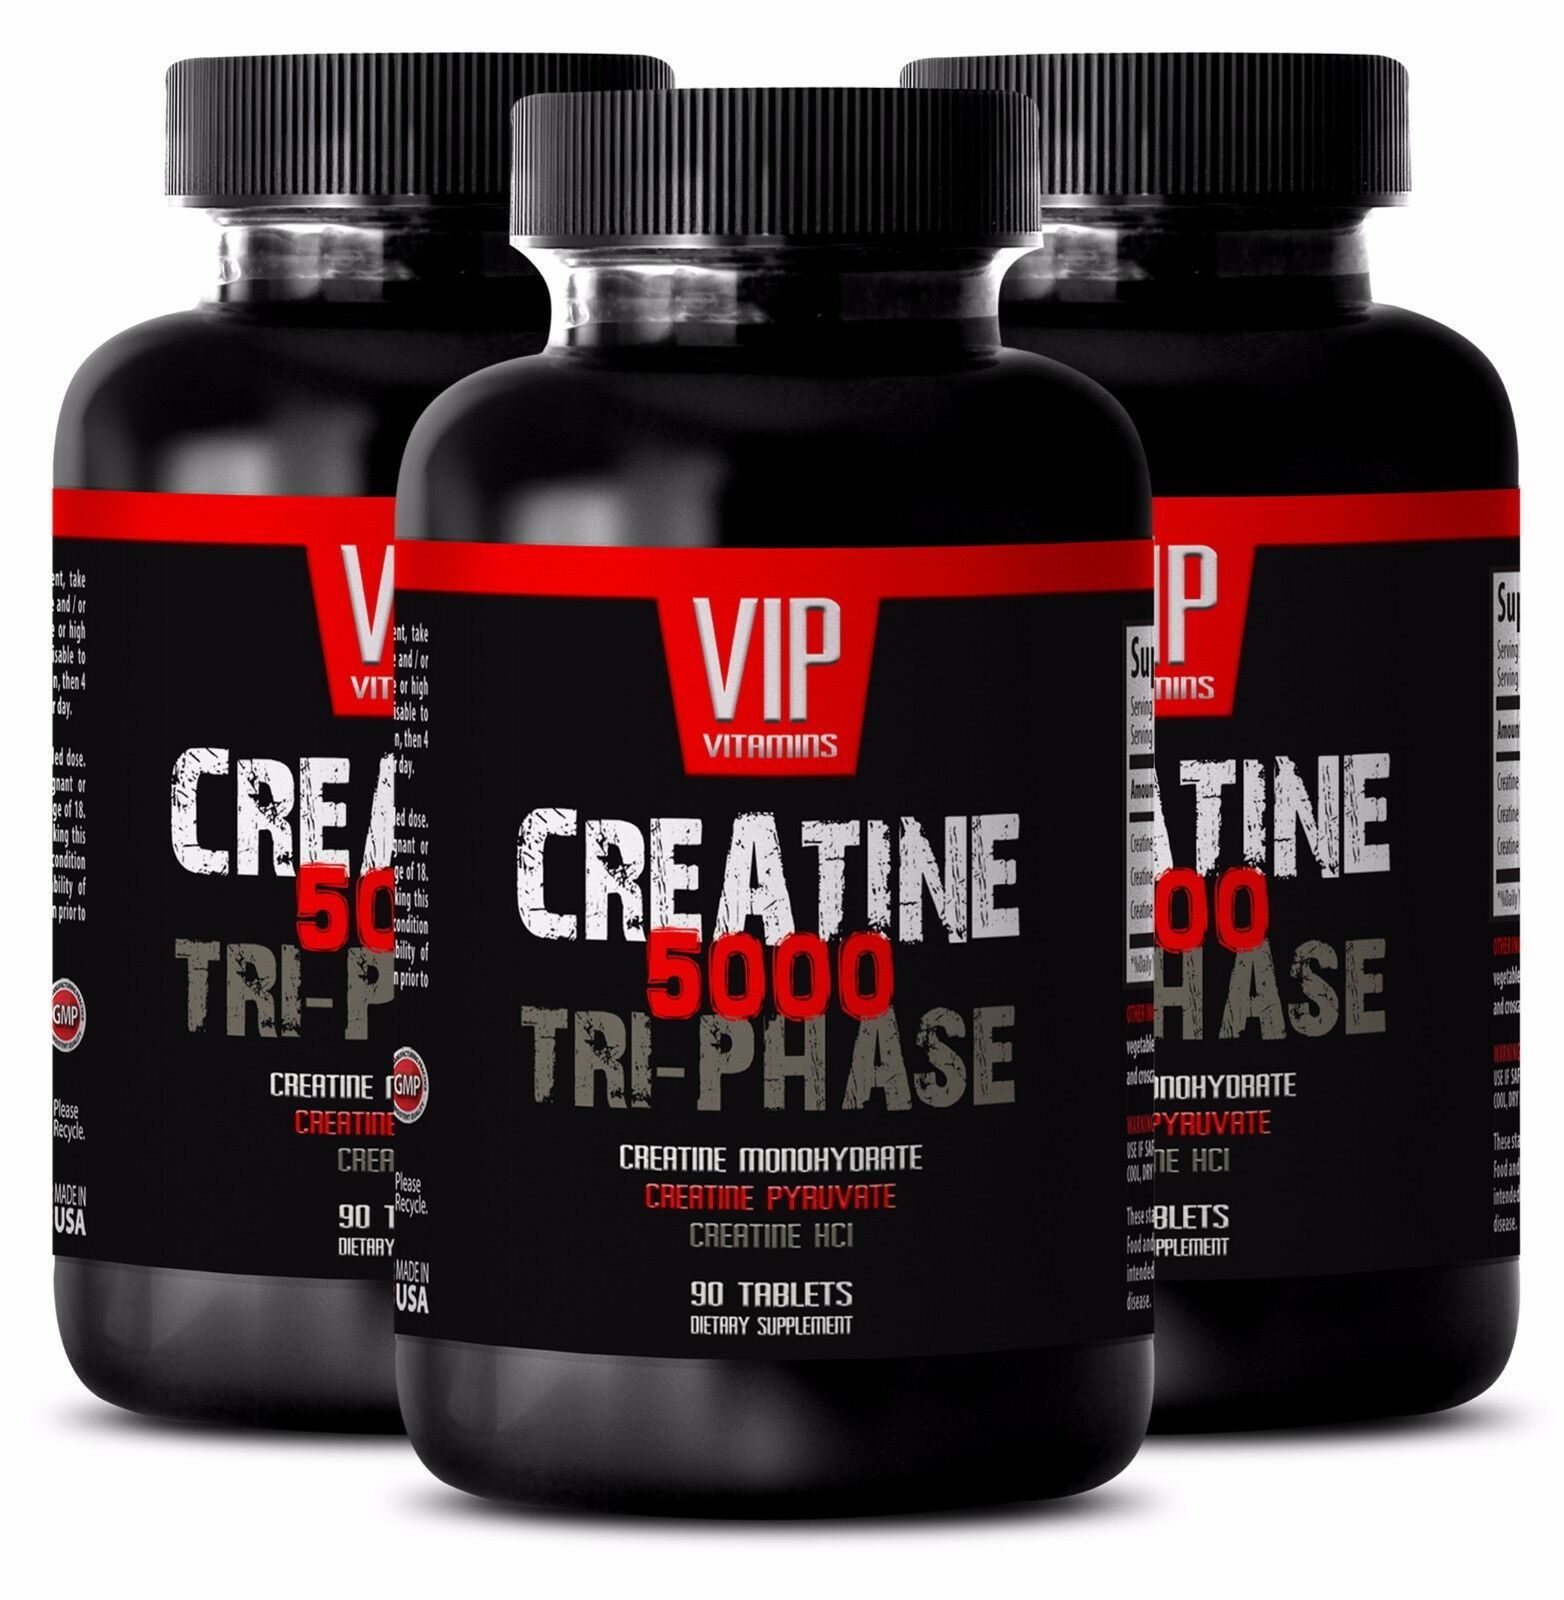 Muscle gain equipment - CREATINE TRI-PHASE 5000mg - creatine in a pill 3 Bottles